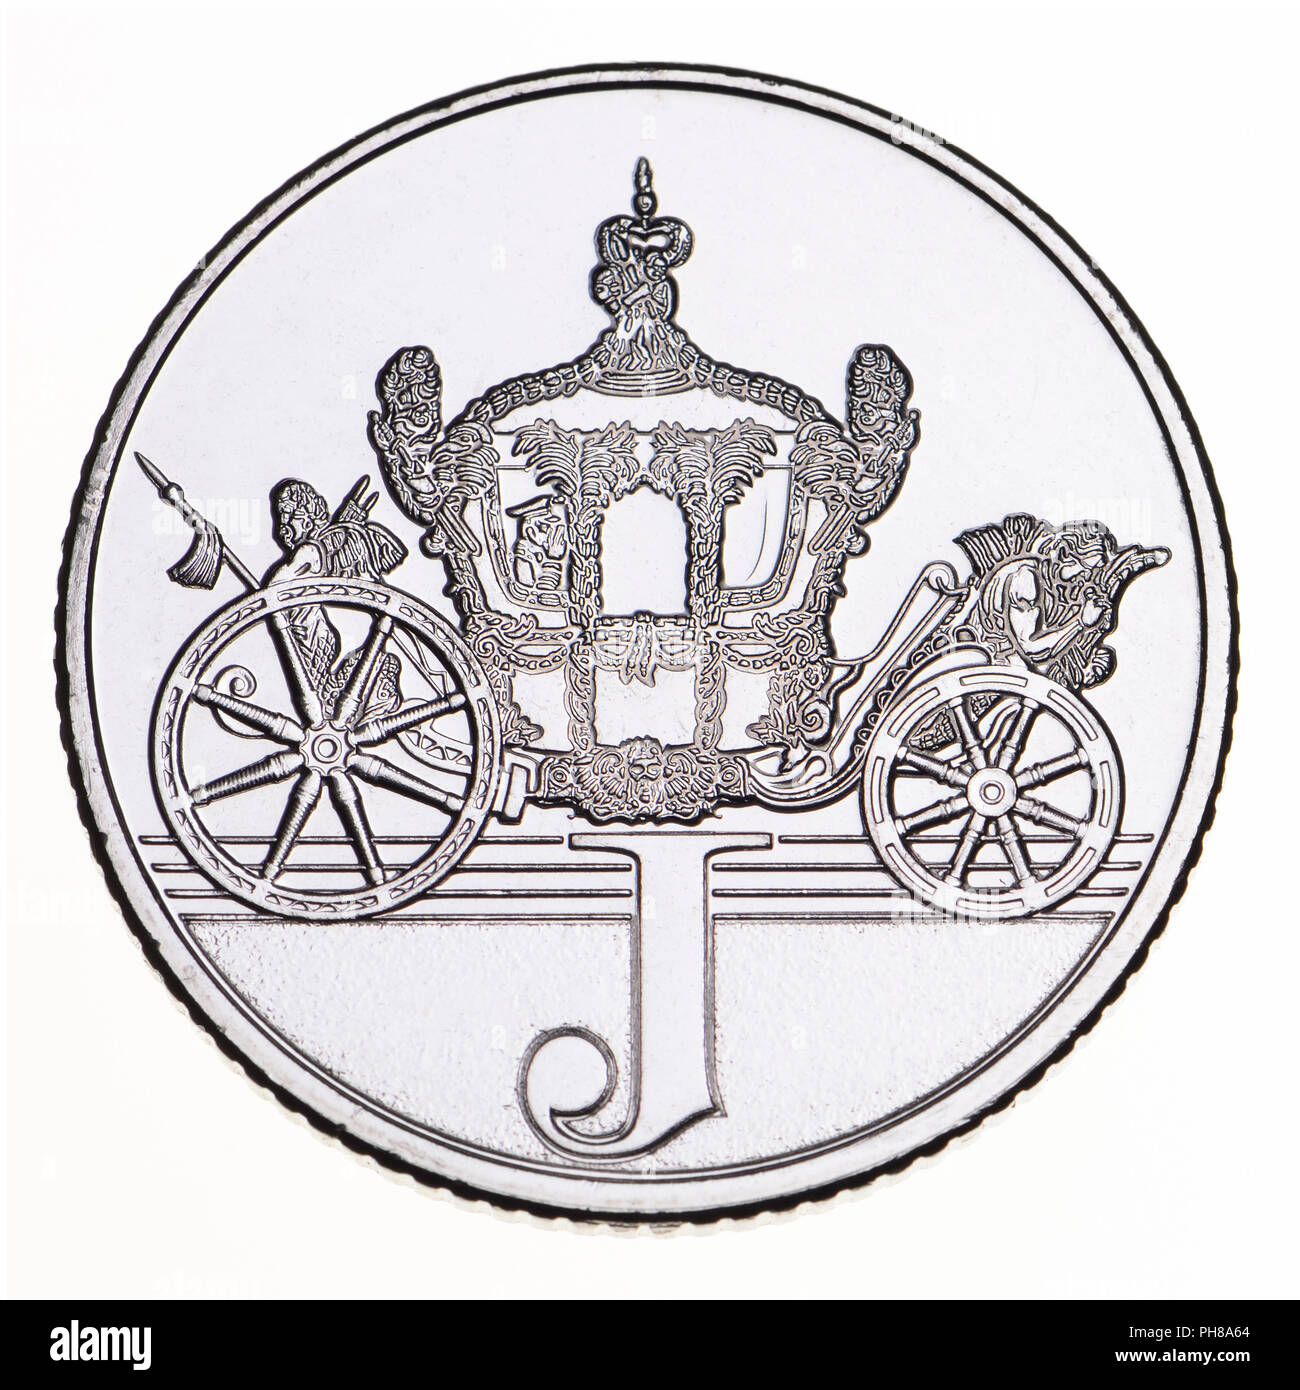 British 10p coin (reverse) from 2018 'Alphabet' series, celebrating Britishness. J - jubilee Stock Photo